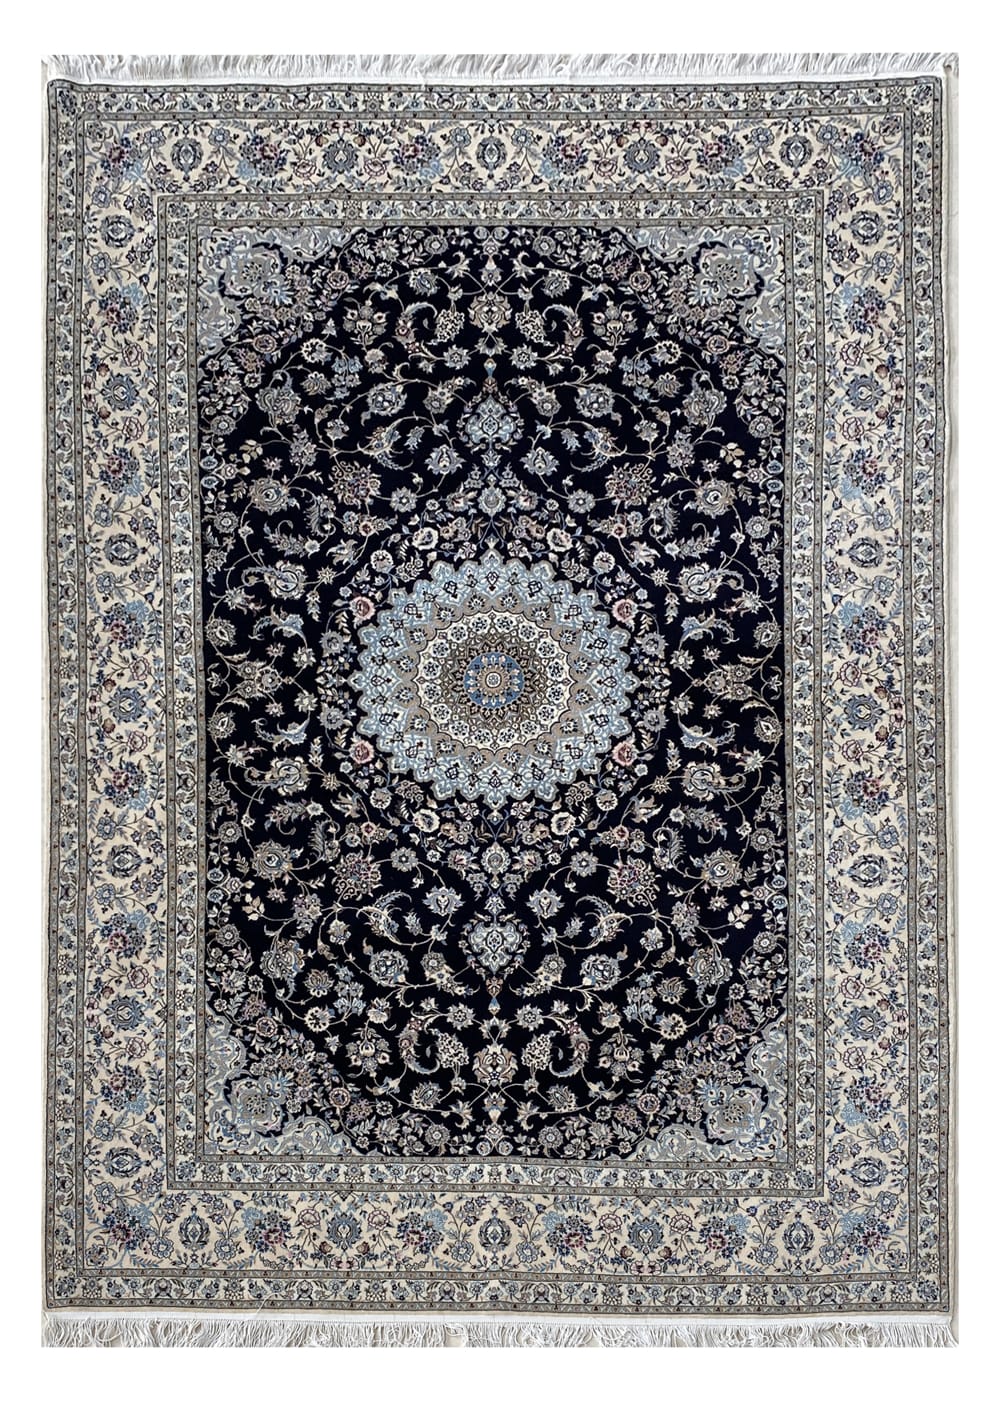 Rug# 10056, 6LA Nain, wool & silk pile, 900,000 KPSQM, circa 2000, Persia, size 308x213 cm (2)